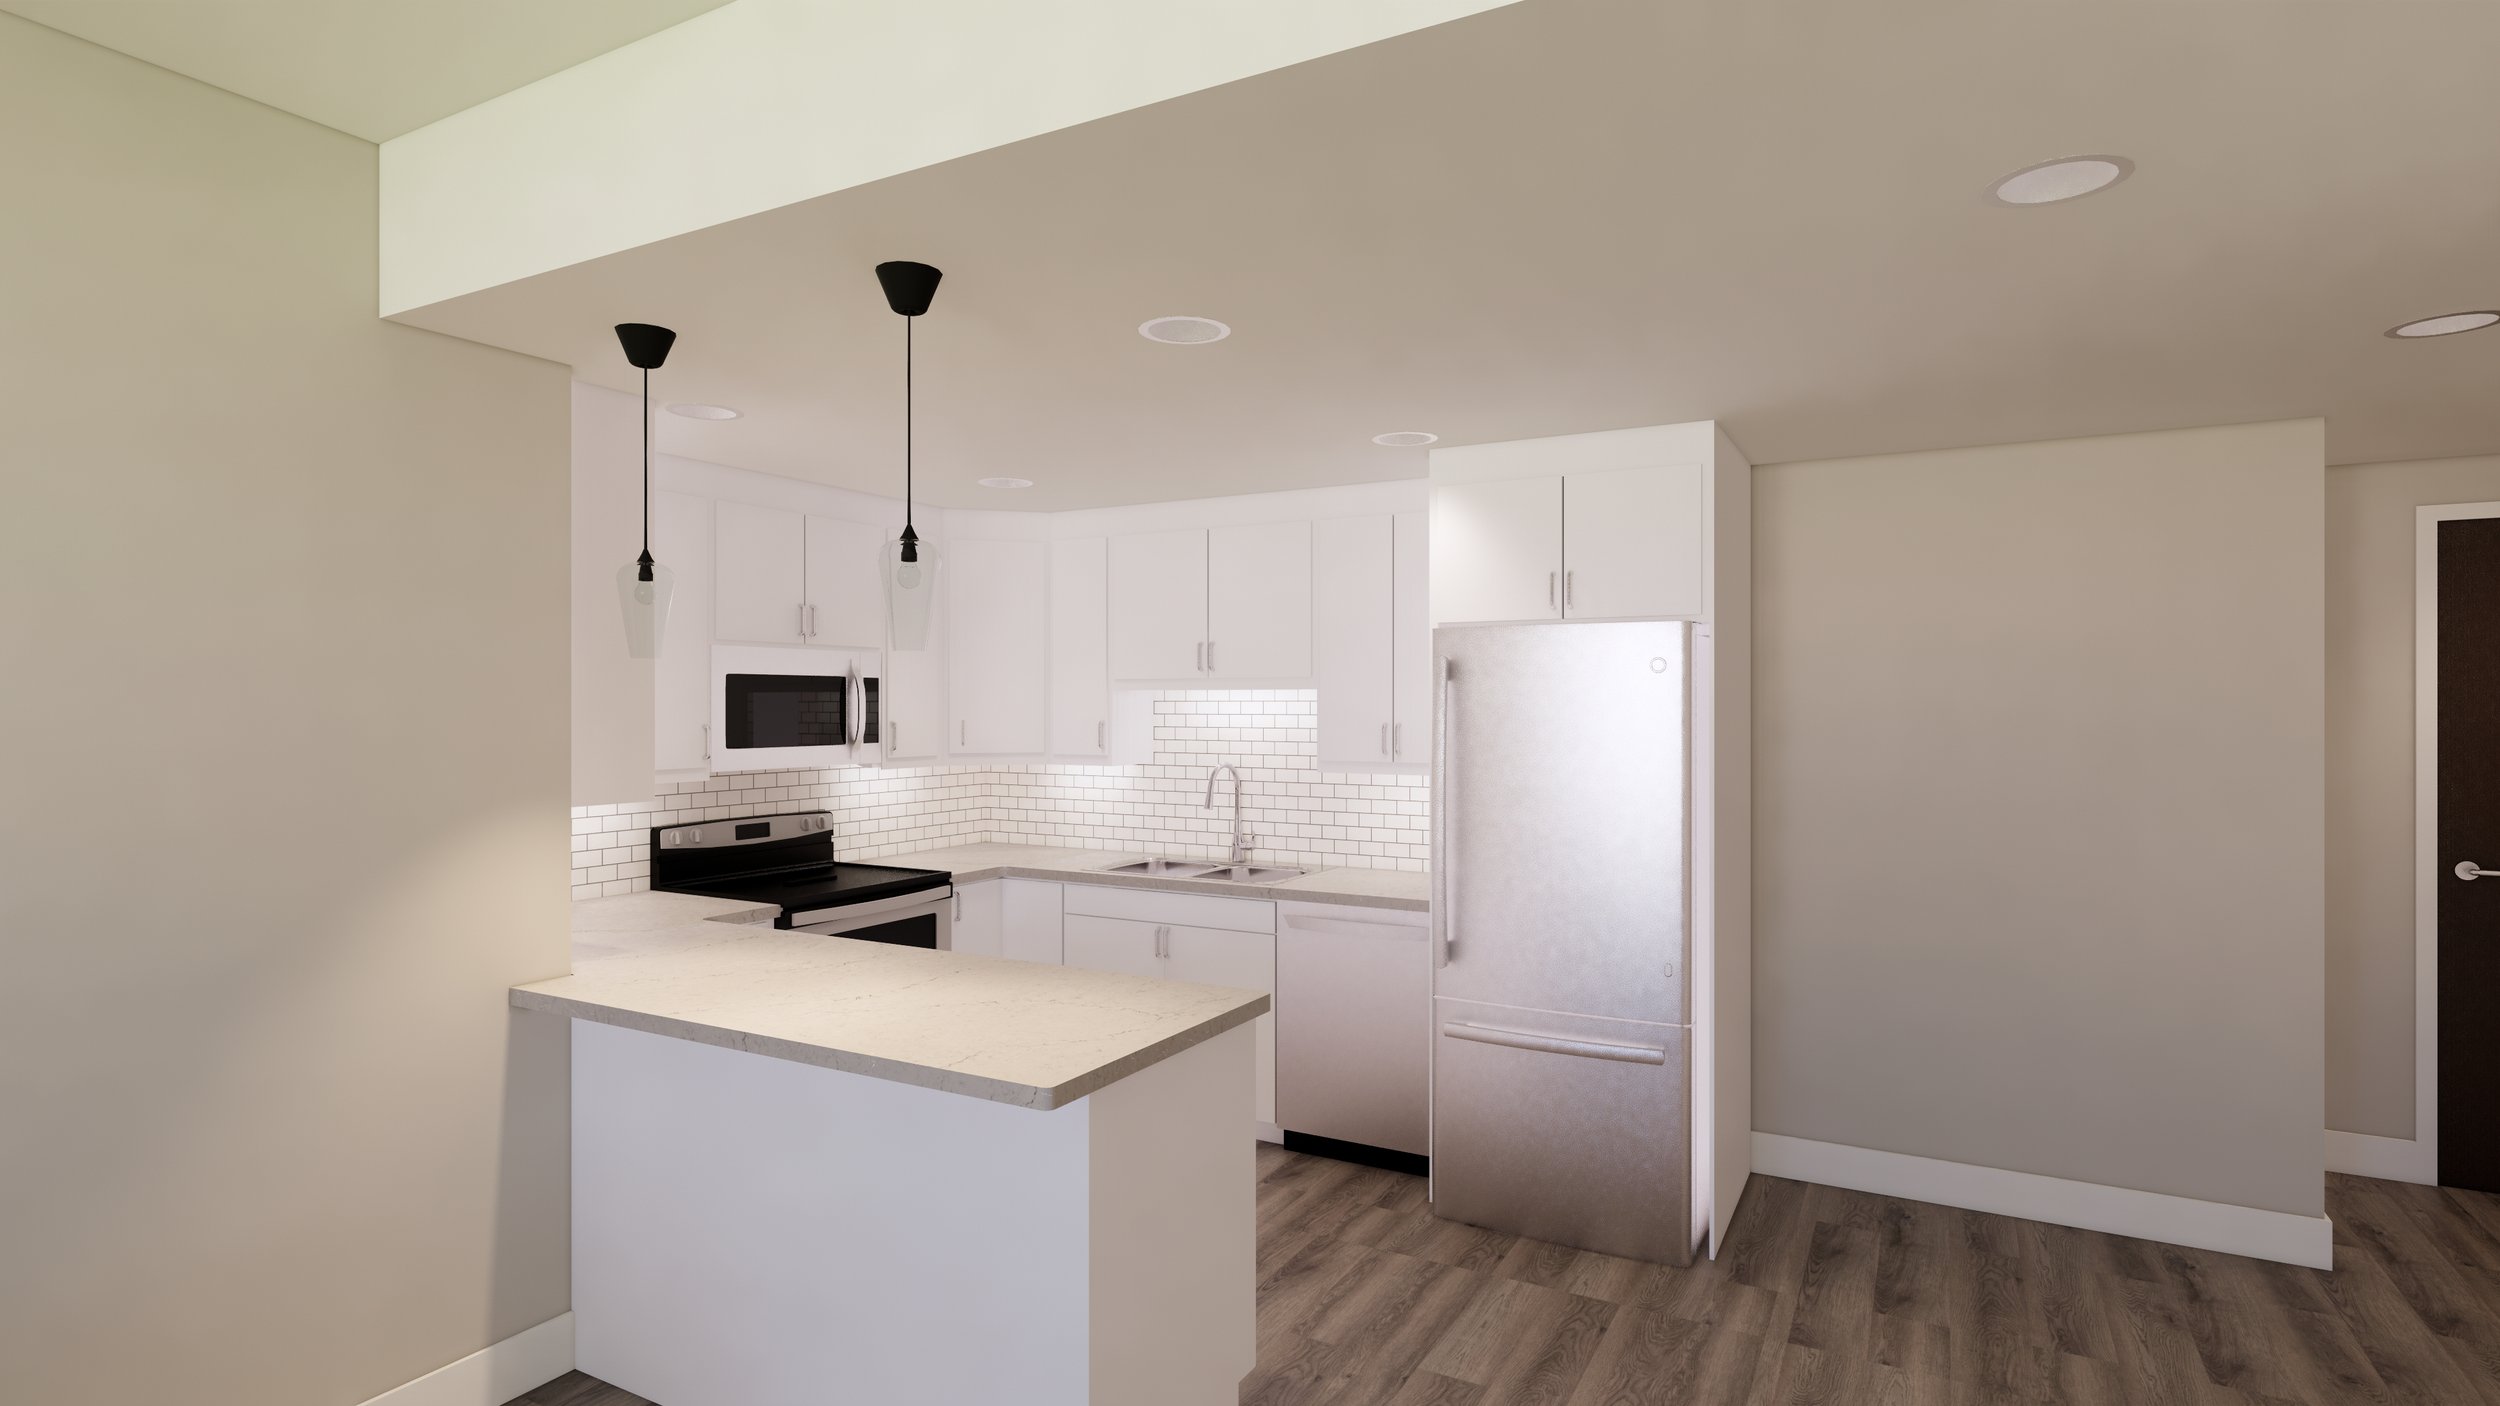 Interior - Typical Apartment Kitchen